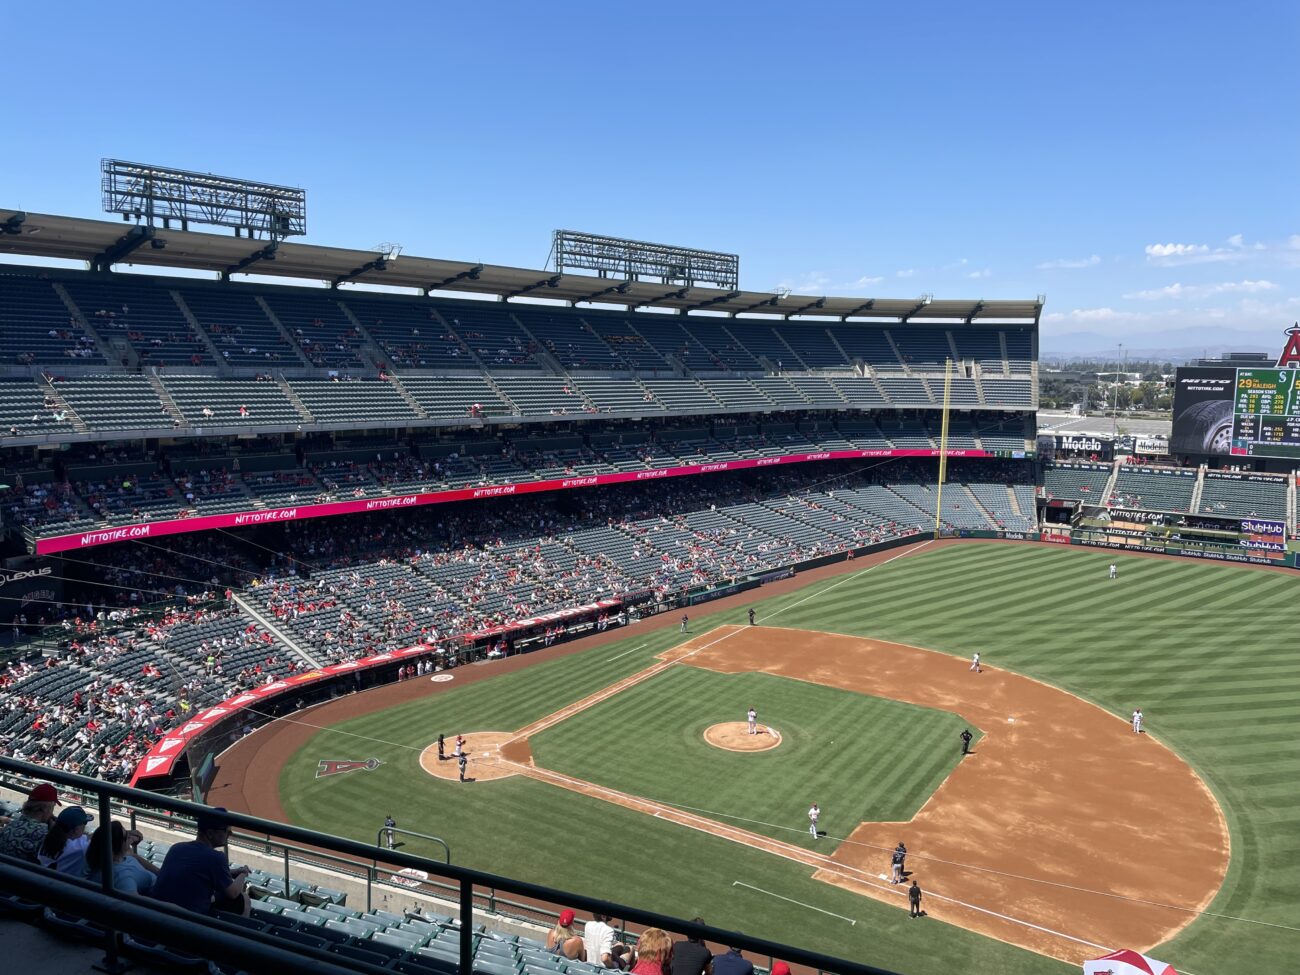 Angels Stadium of Anaheim Seats for Sale (Restored)